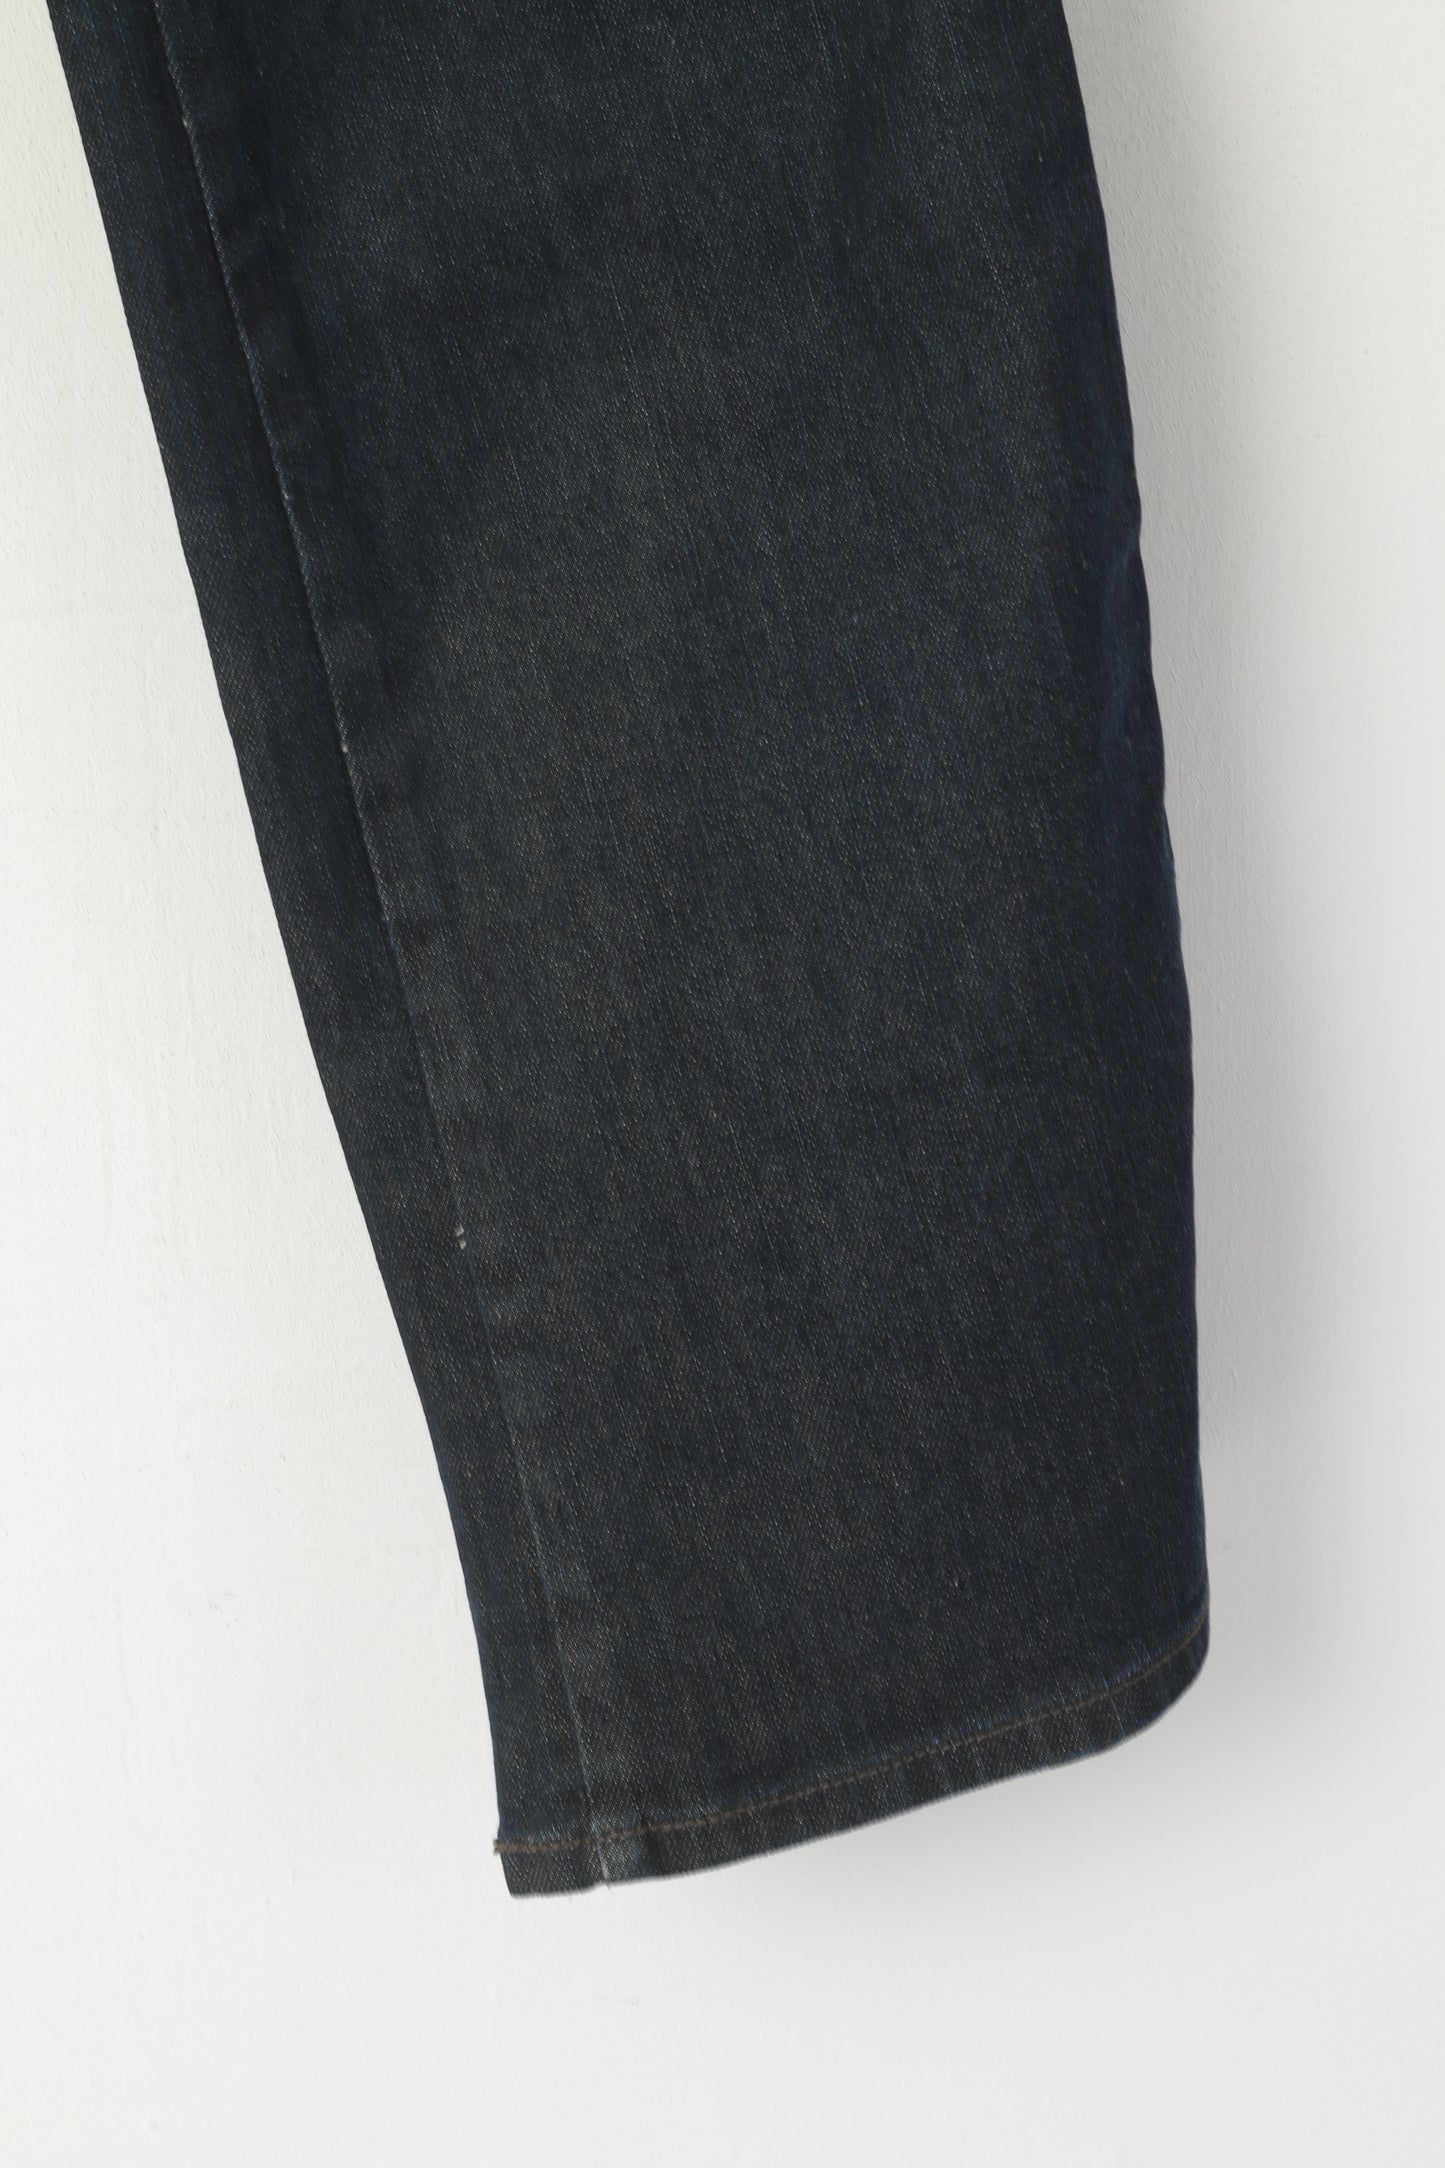 Diesel Women 32 Trousers Denim Jeans Navy Cotton RYOTH-N Stretch Pants